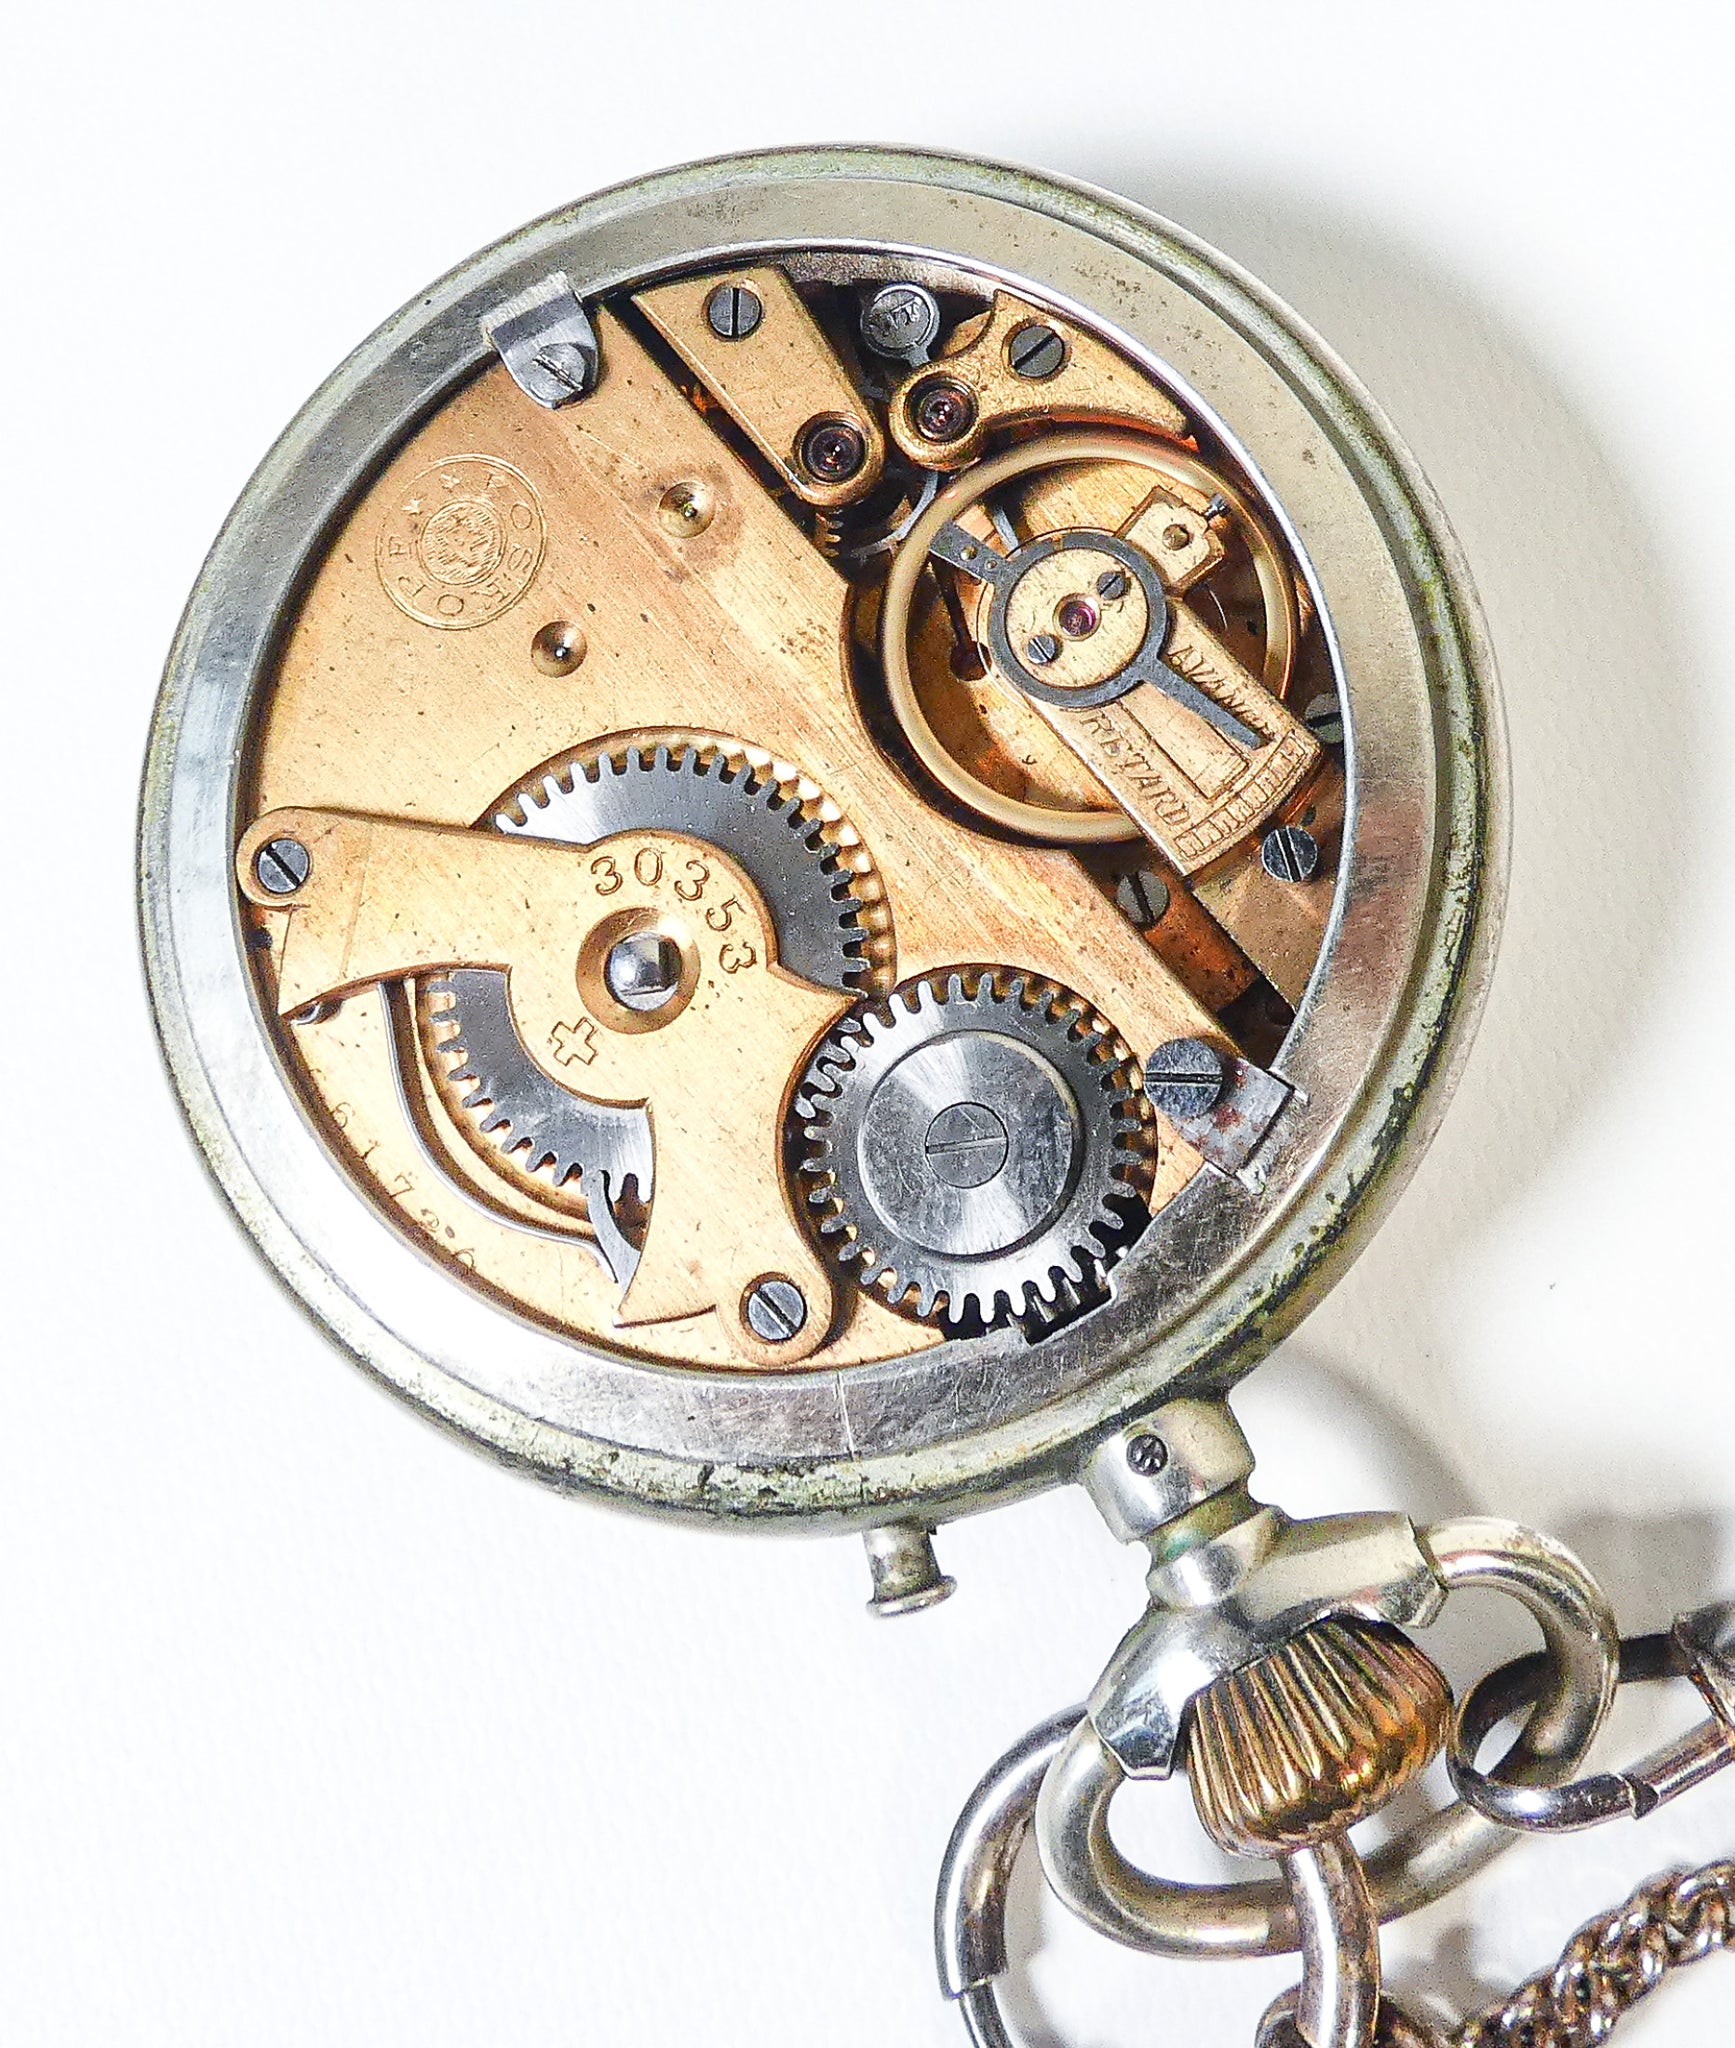 orologio tasca roskopf wille freres cal 30353 svizzera carica manuale epoca